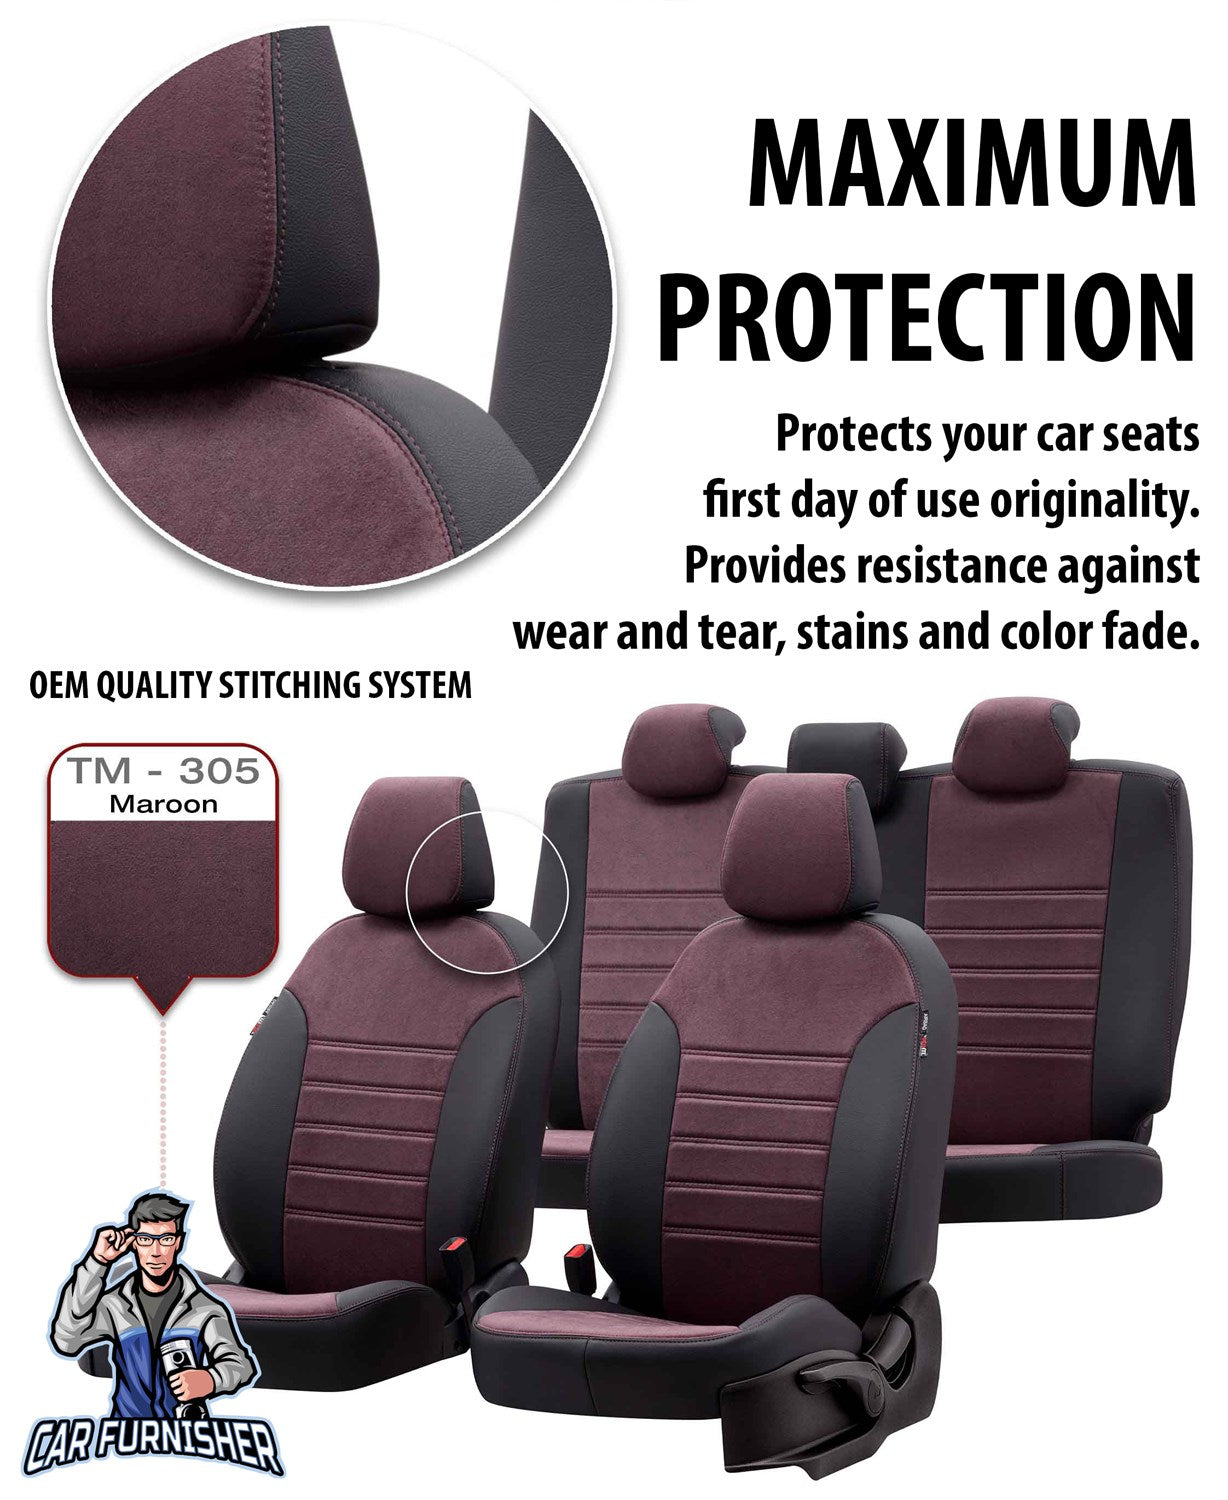 Fiat Stilo Seat Covers Milano Suede Design Burgundy Leather & Suede Fabric